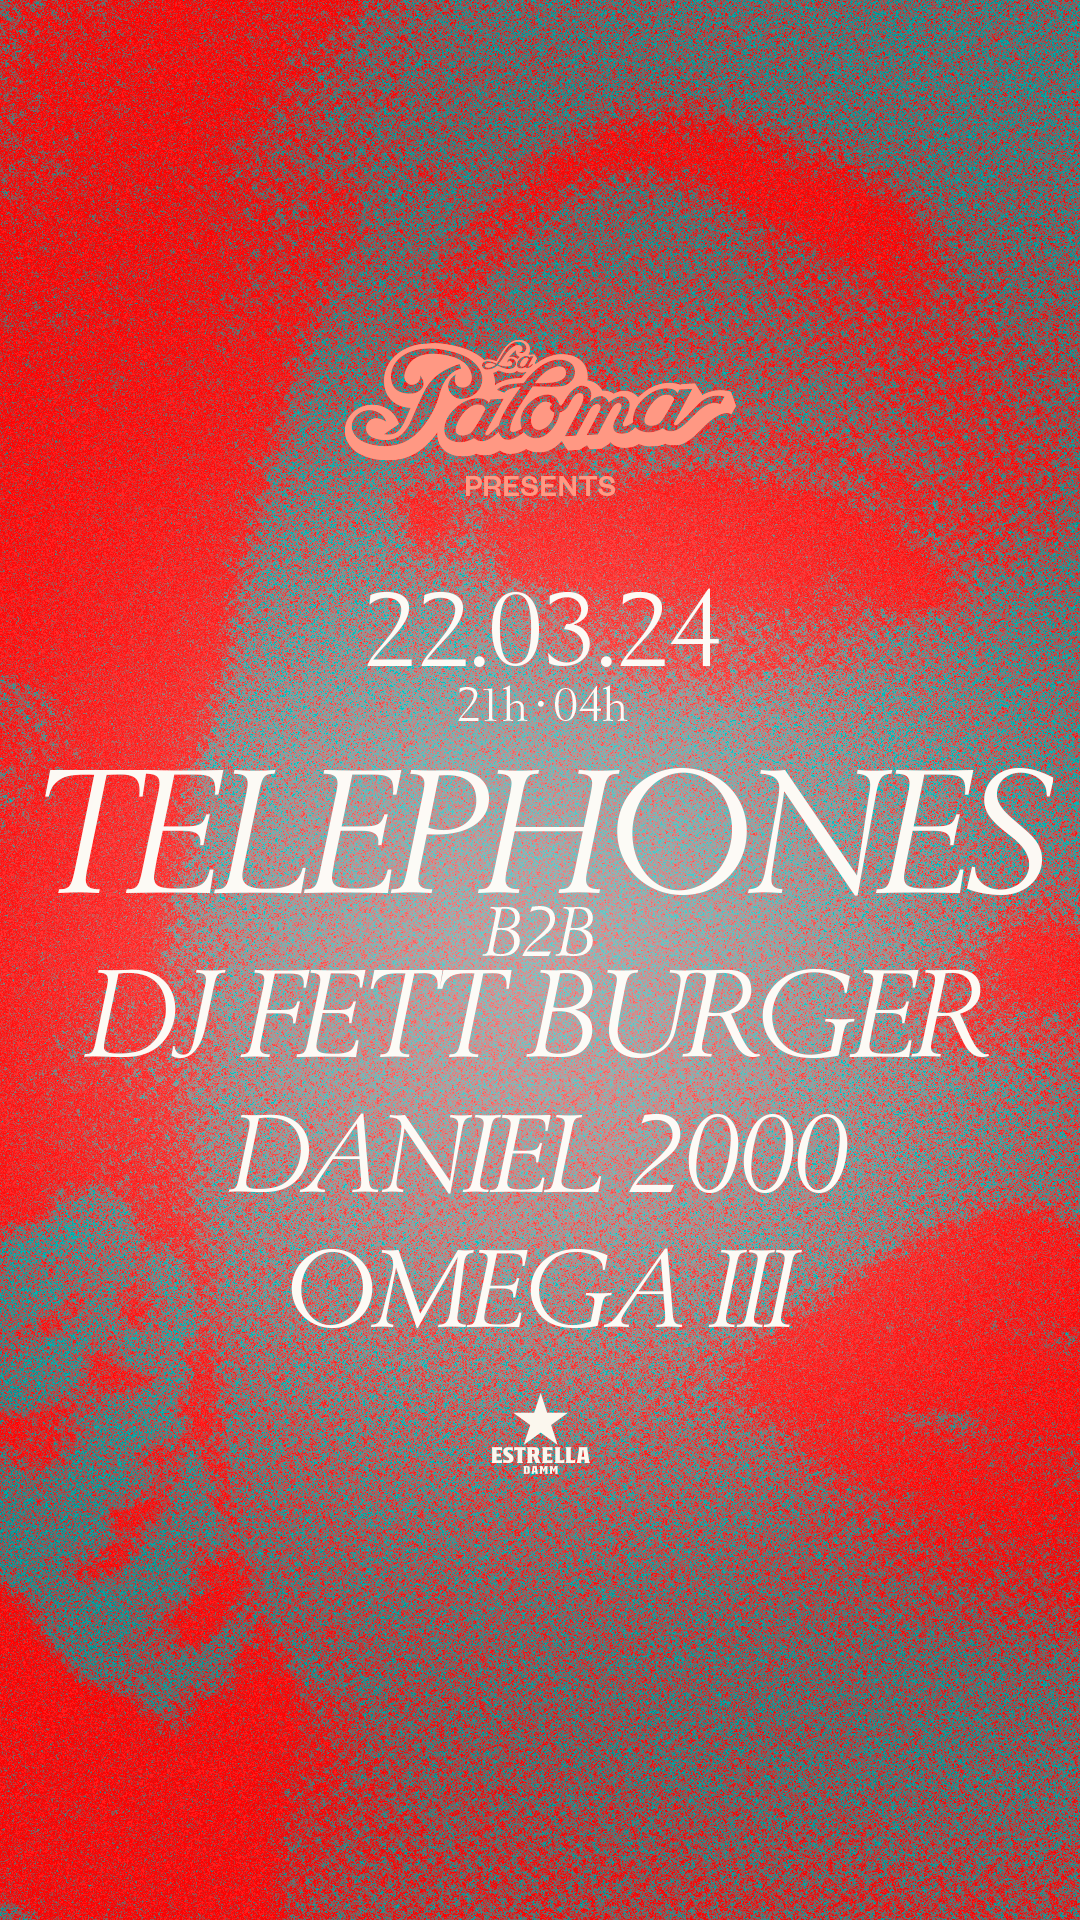 La Paloma presents: Telephones B2B DJ Fett Burger, Daniel 2000, Omega III - フライヤー裏